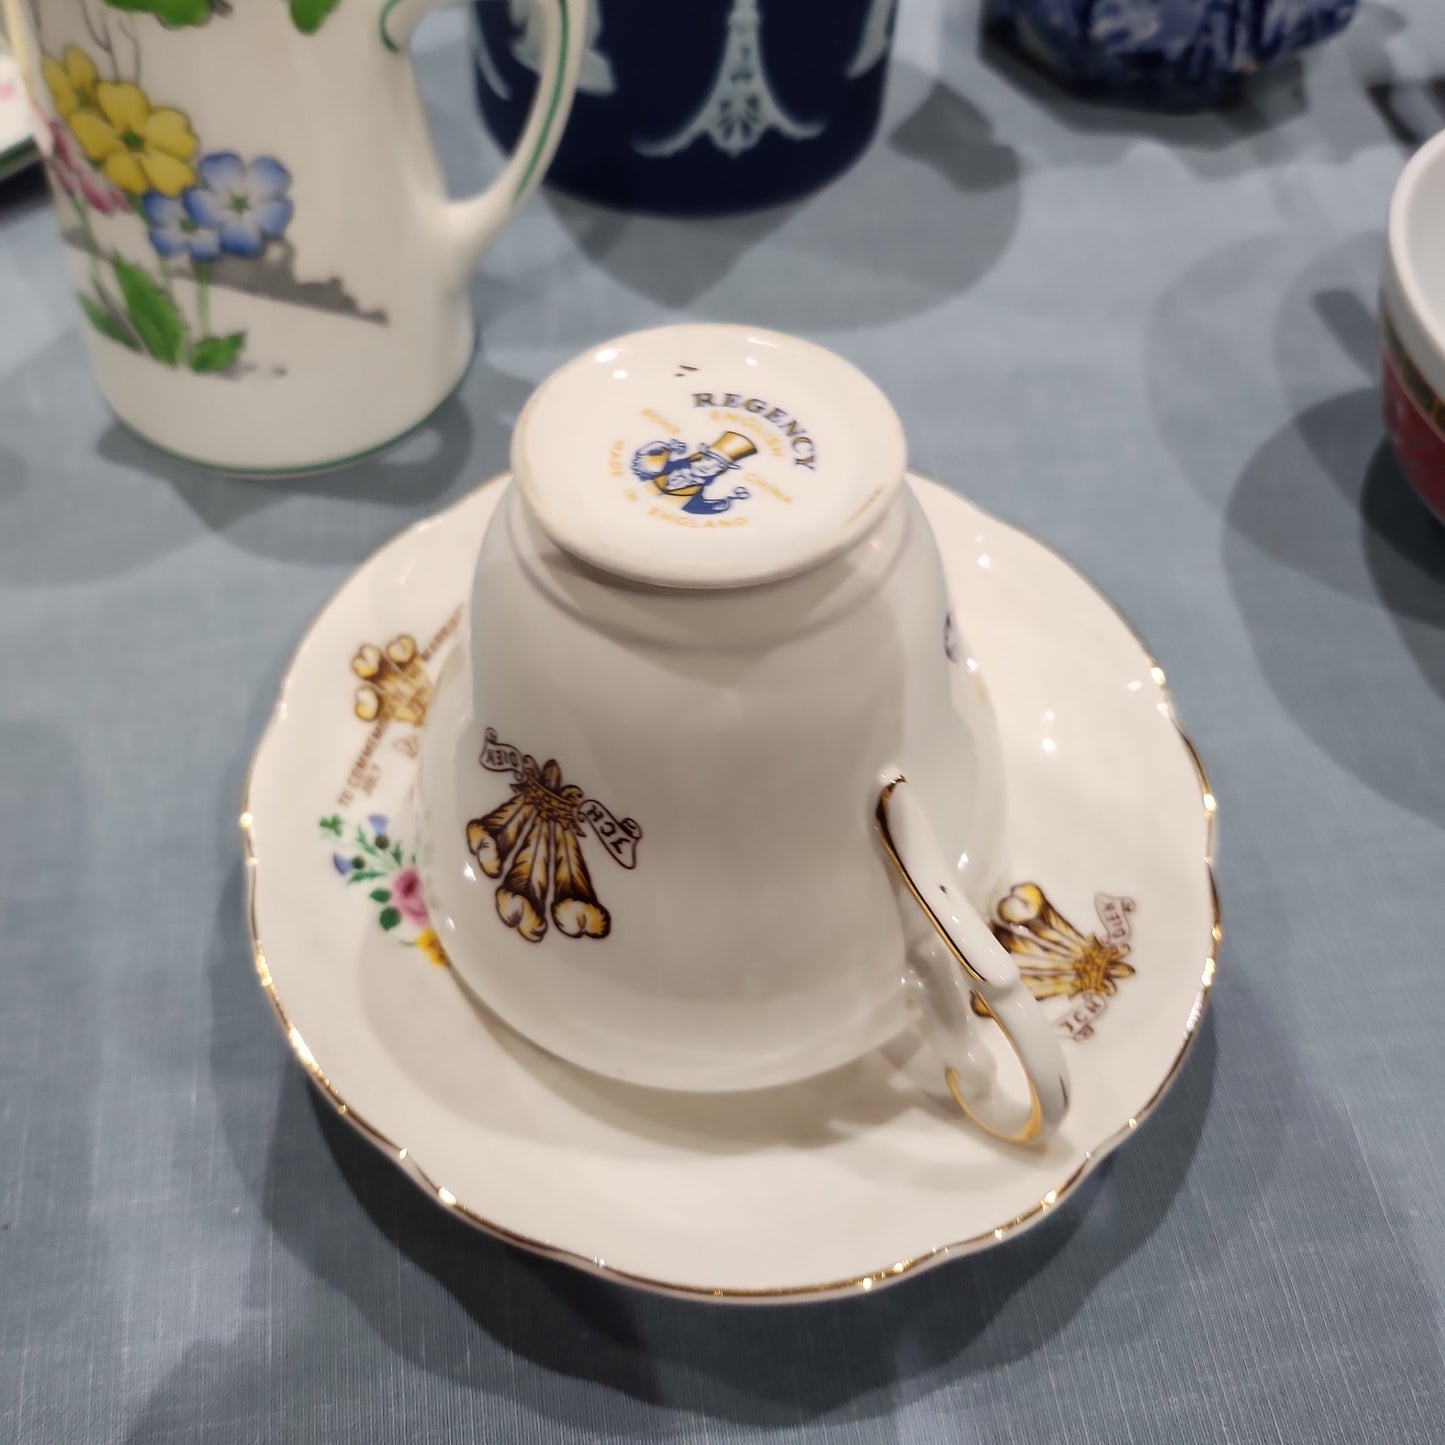 Regency Royal wedding Tea set